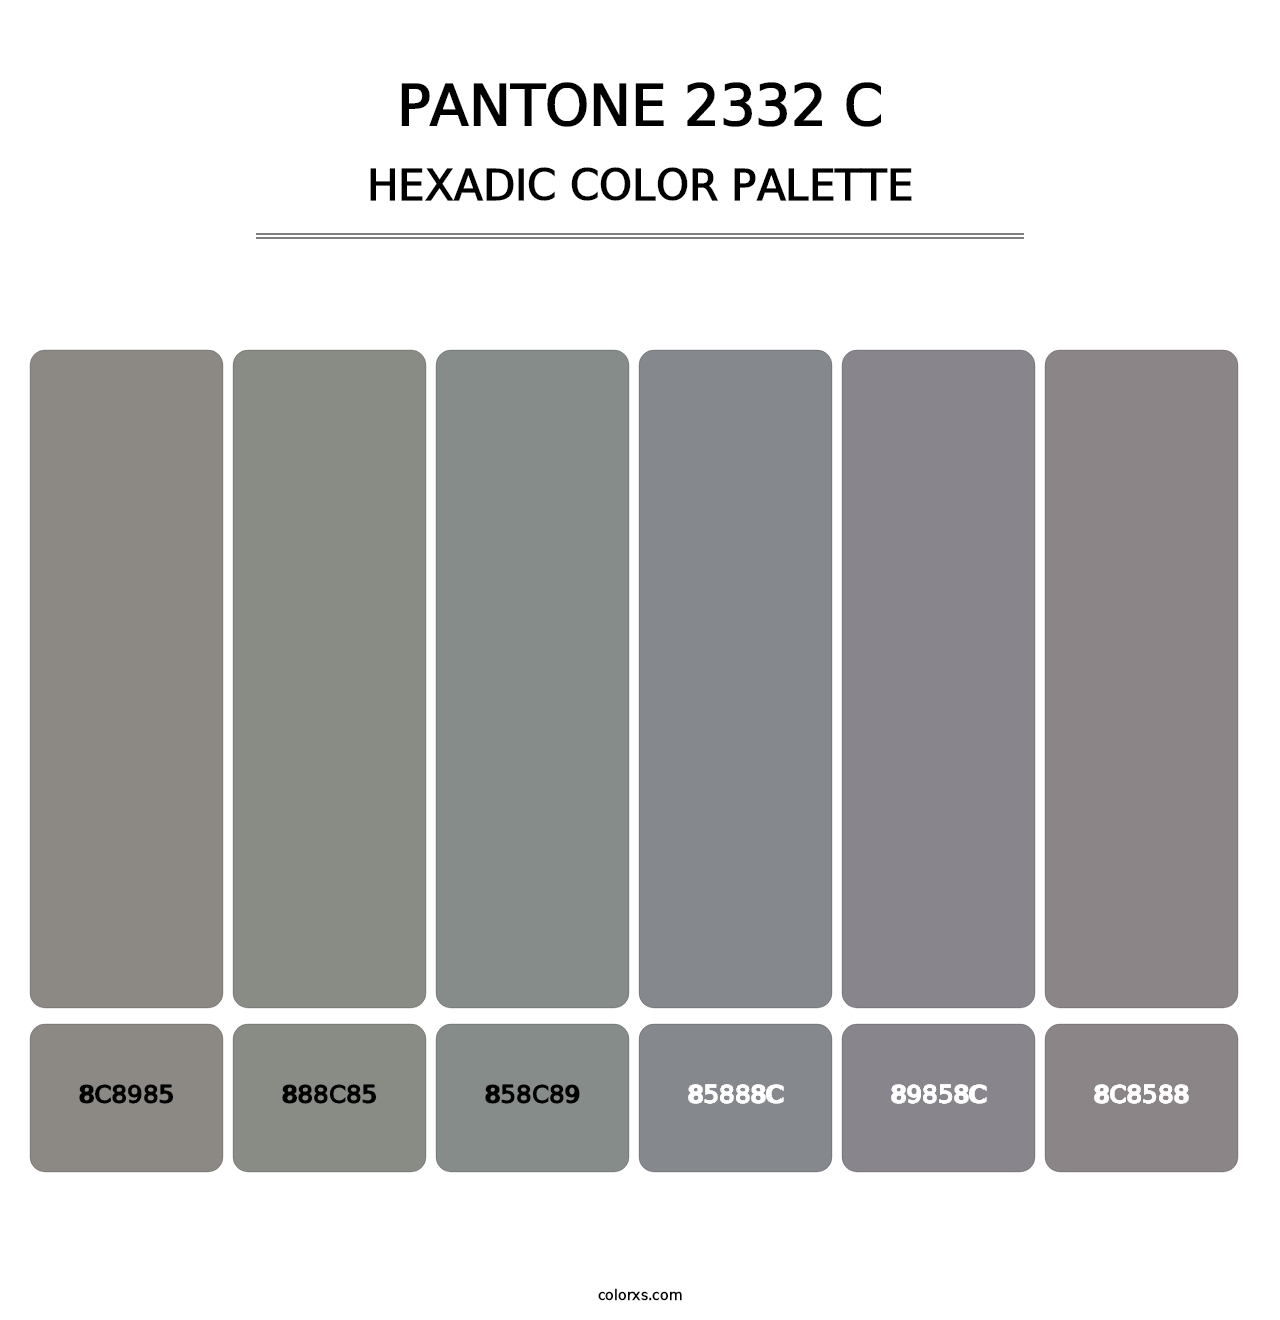 PANTONE 2332 C - Hexadic Color Palette